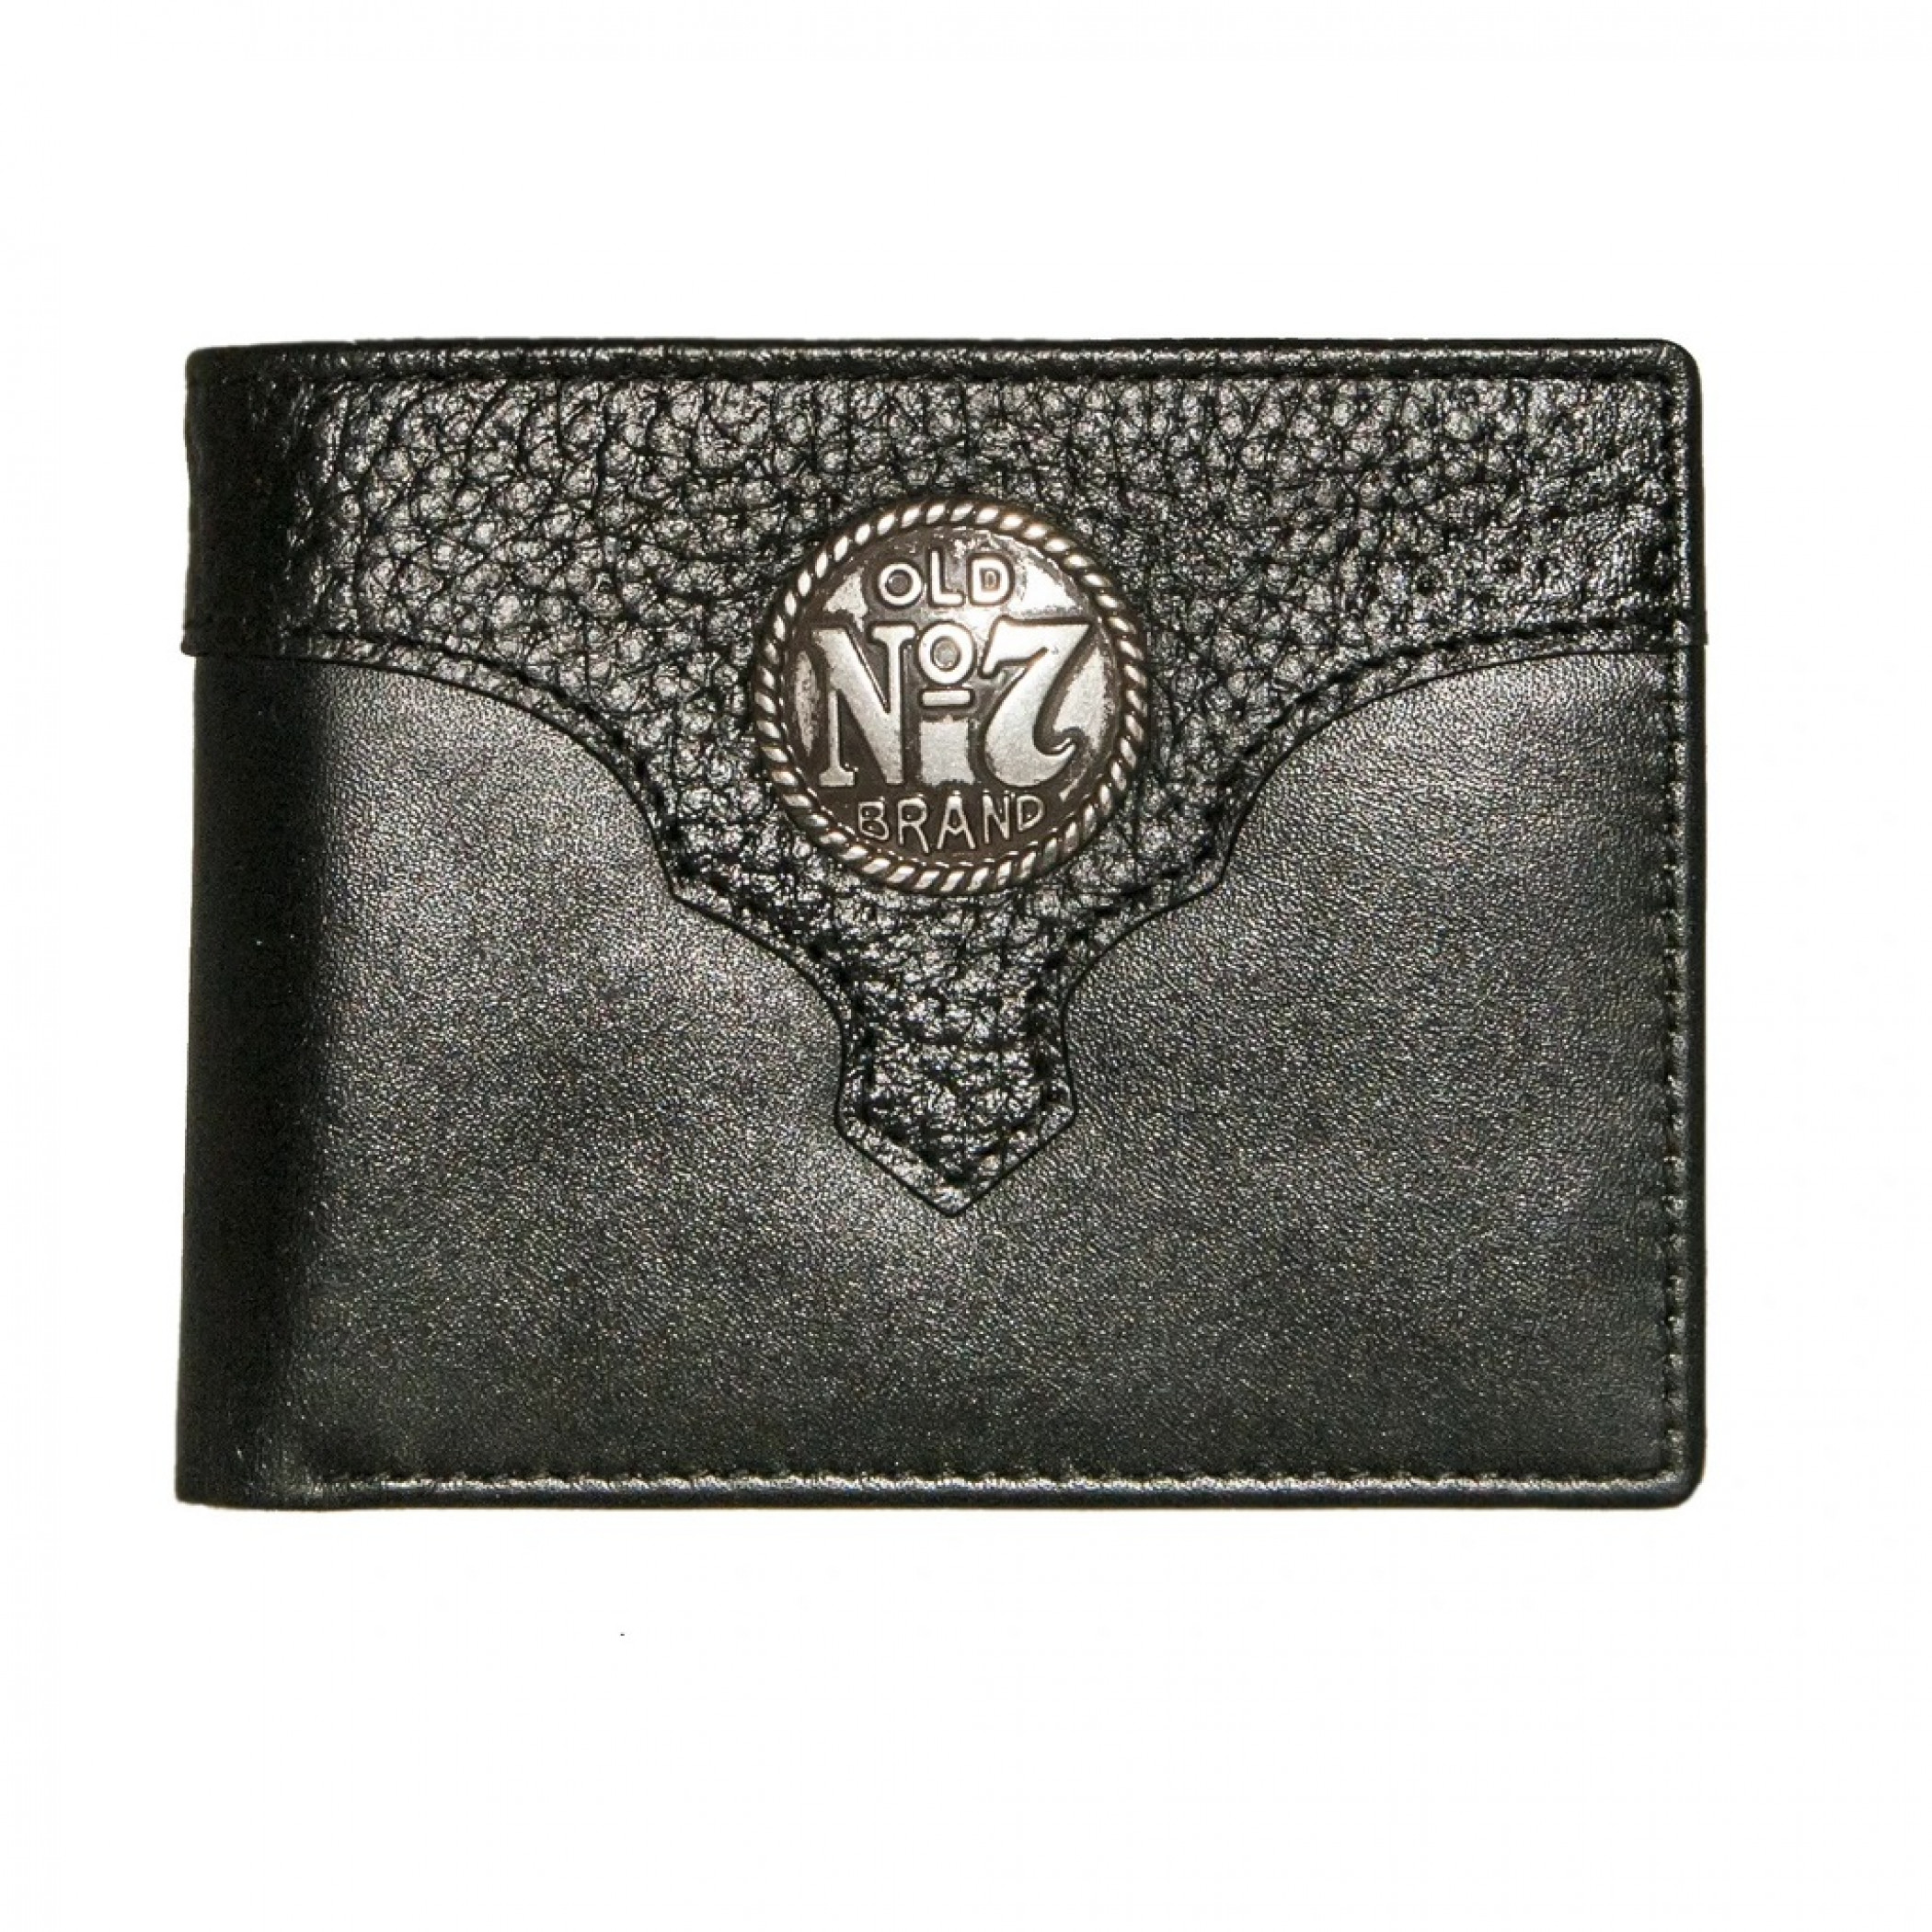 Jack Daniel's Old No. 7 Logo Leather Billfold Wallet